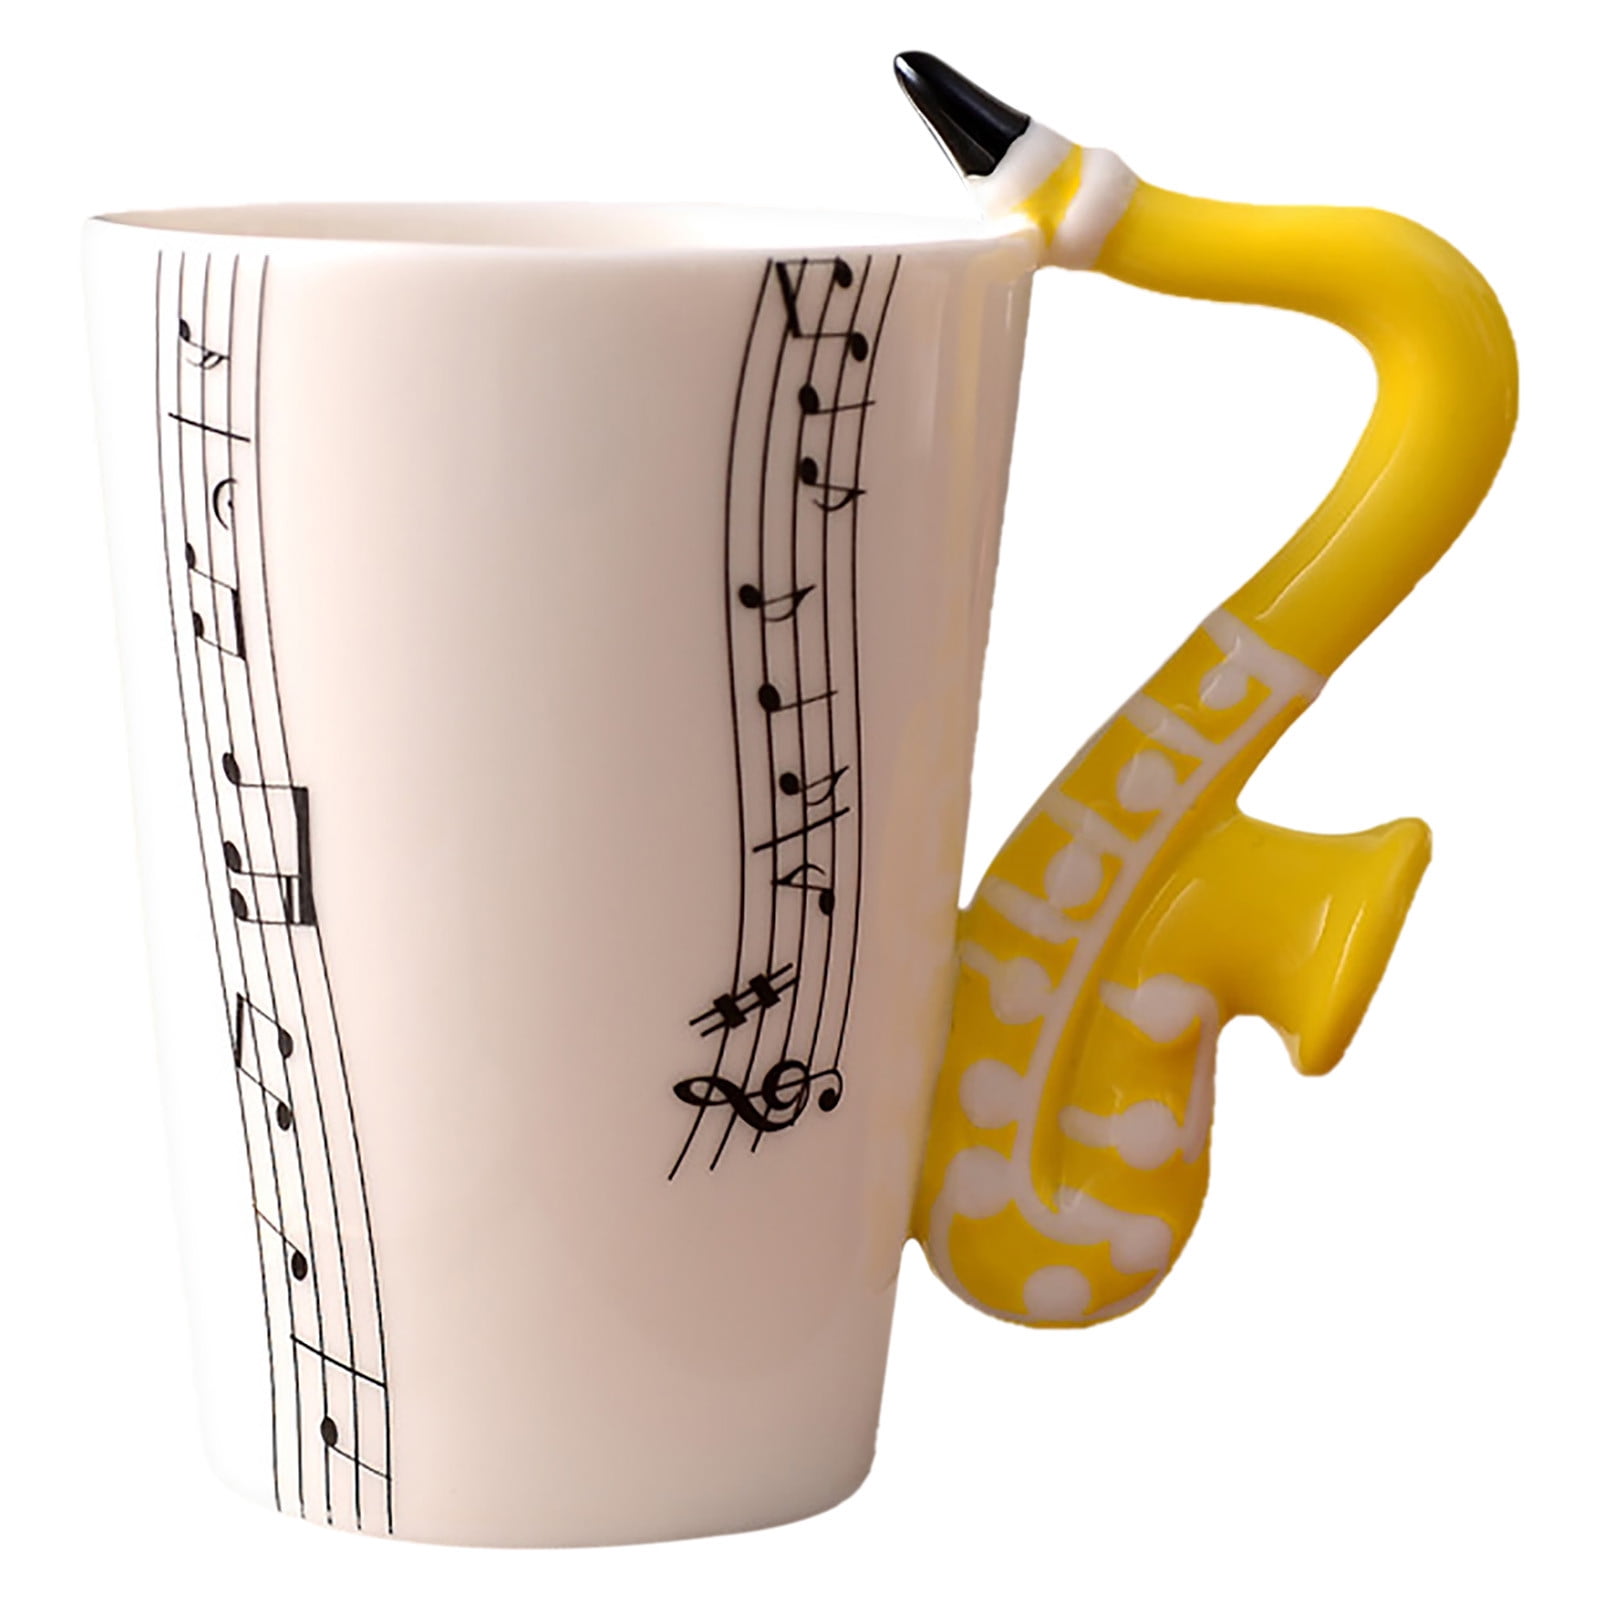 WQQZJJ Kitchen Gadgets Gifts Sale Deals Musician's Coffee Mugs - 10  Creative Designs Guitar Mug Electric Guitar Heartbea on Clearance 